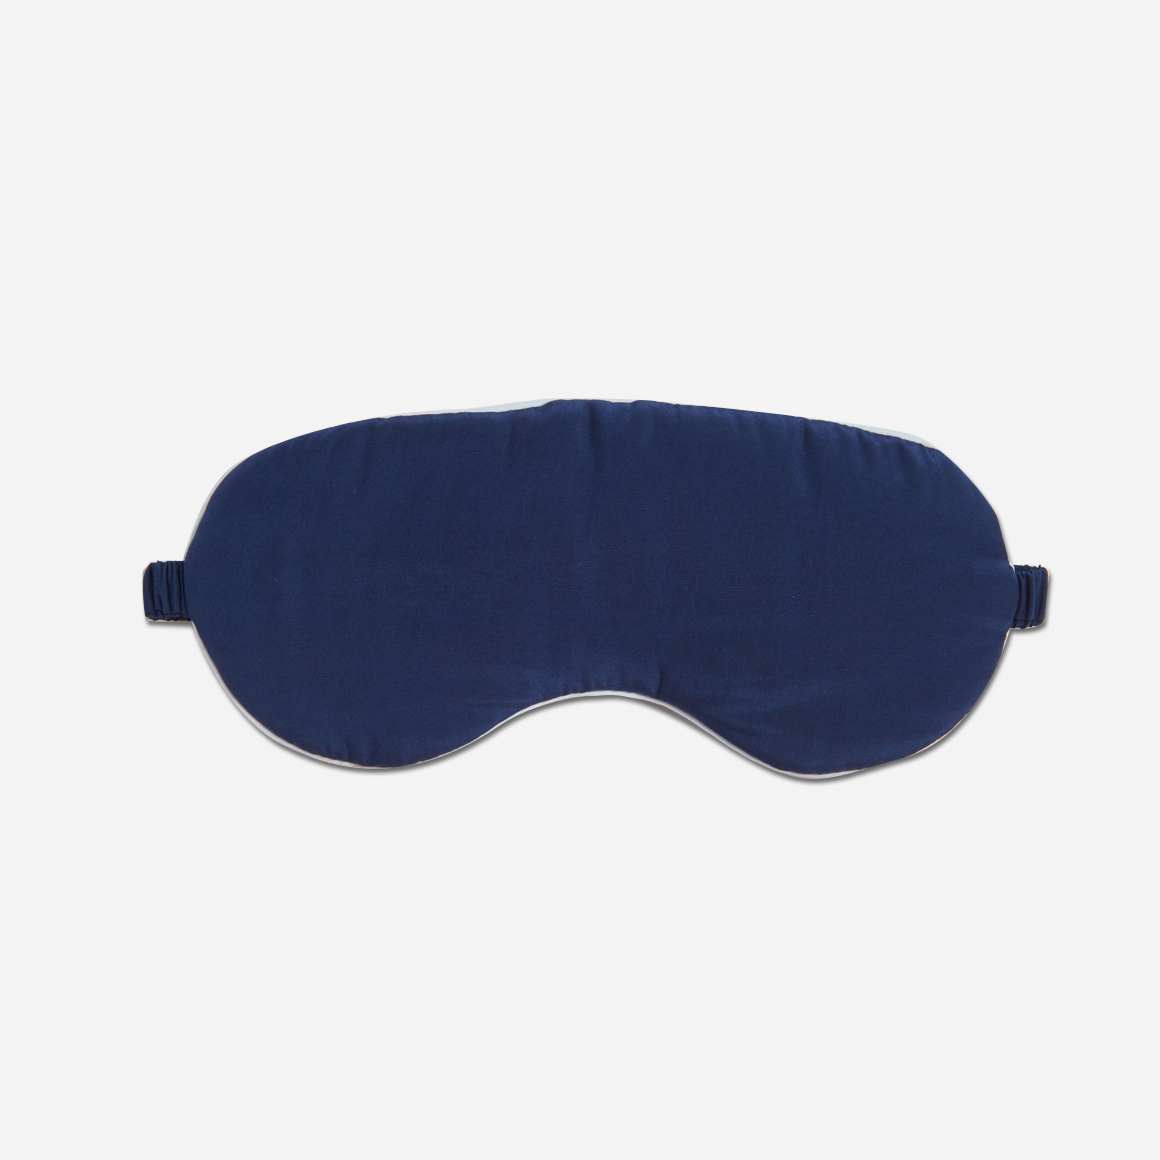 Washable Silk Sleep Mask – Lunya